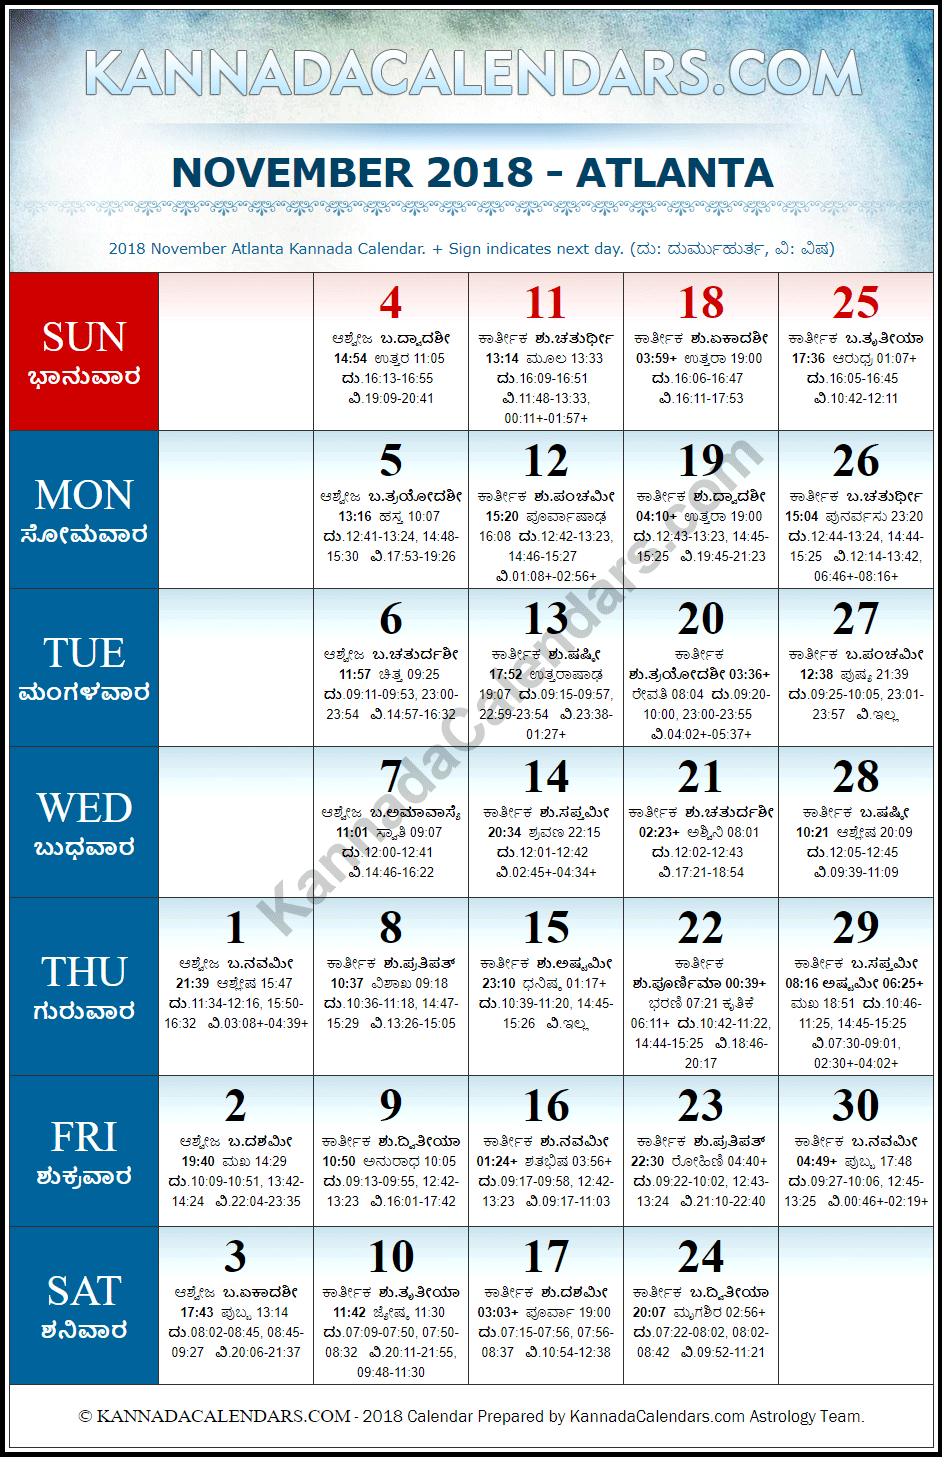 November 2018 Kannada Calendar for Atlanta, USA